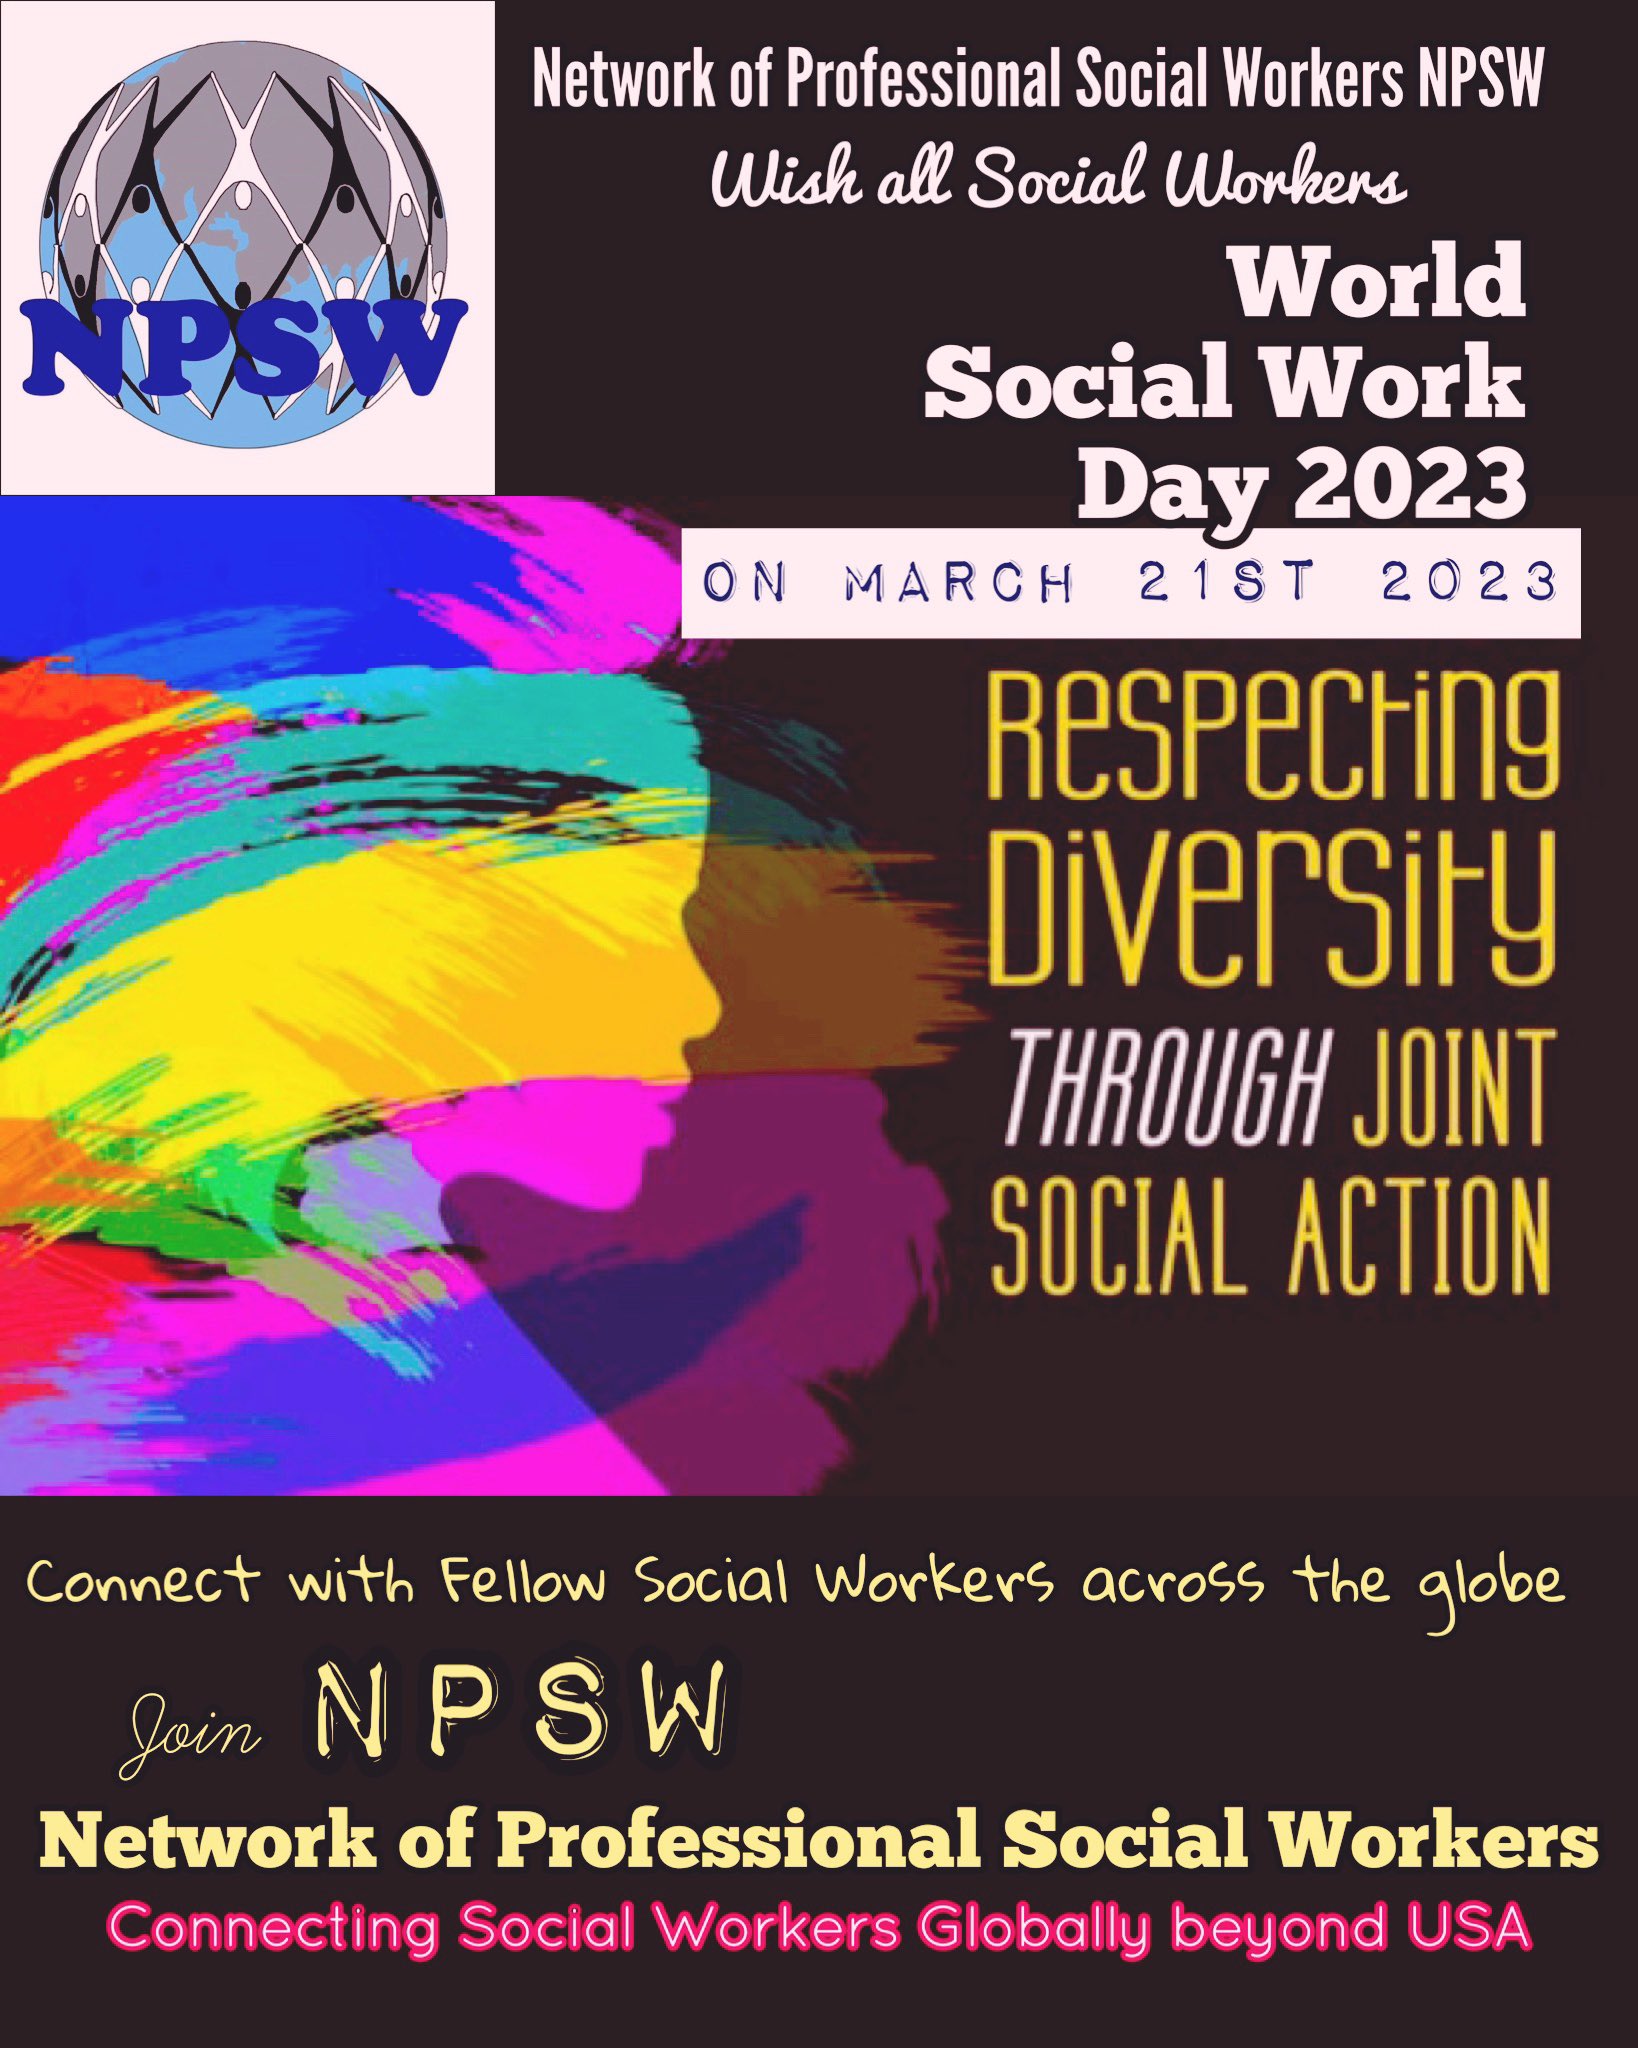 NPSW on Twitter "NPSW wish all Social Workers a Happy World Social